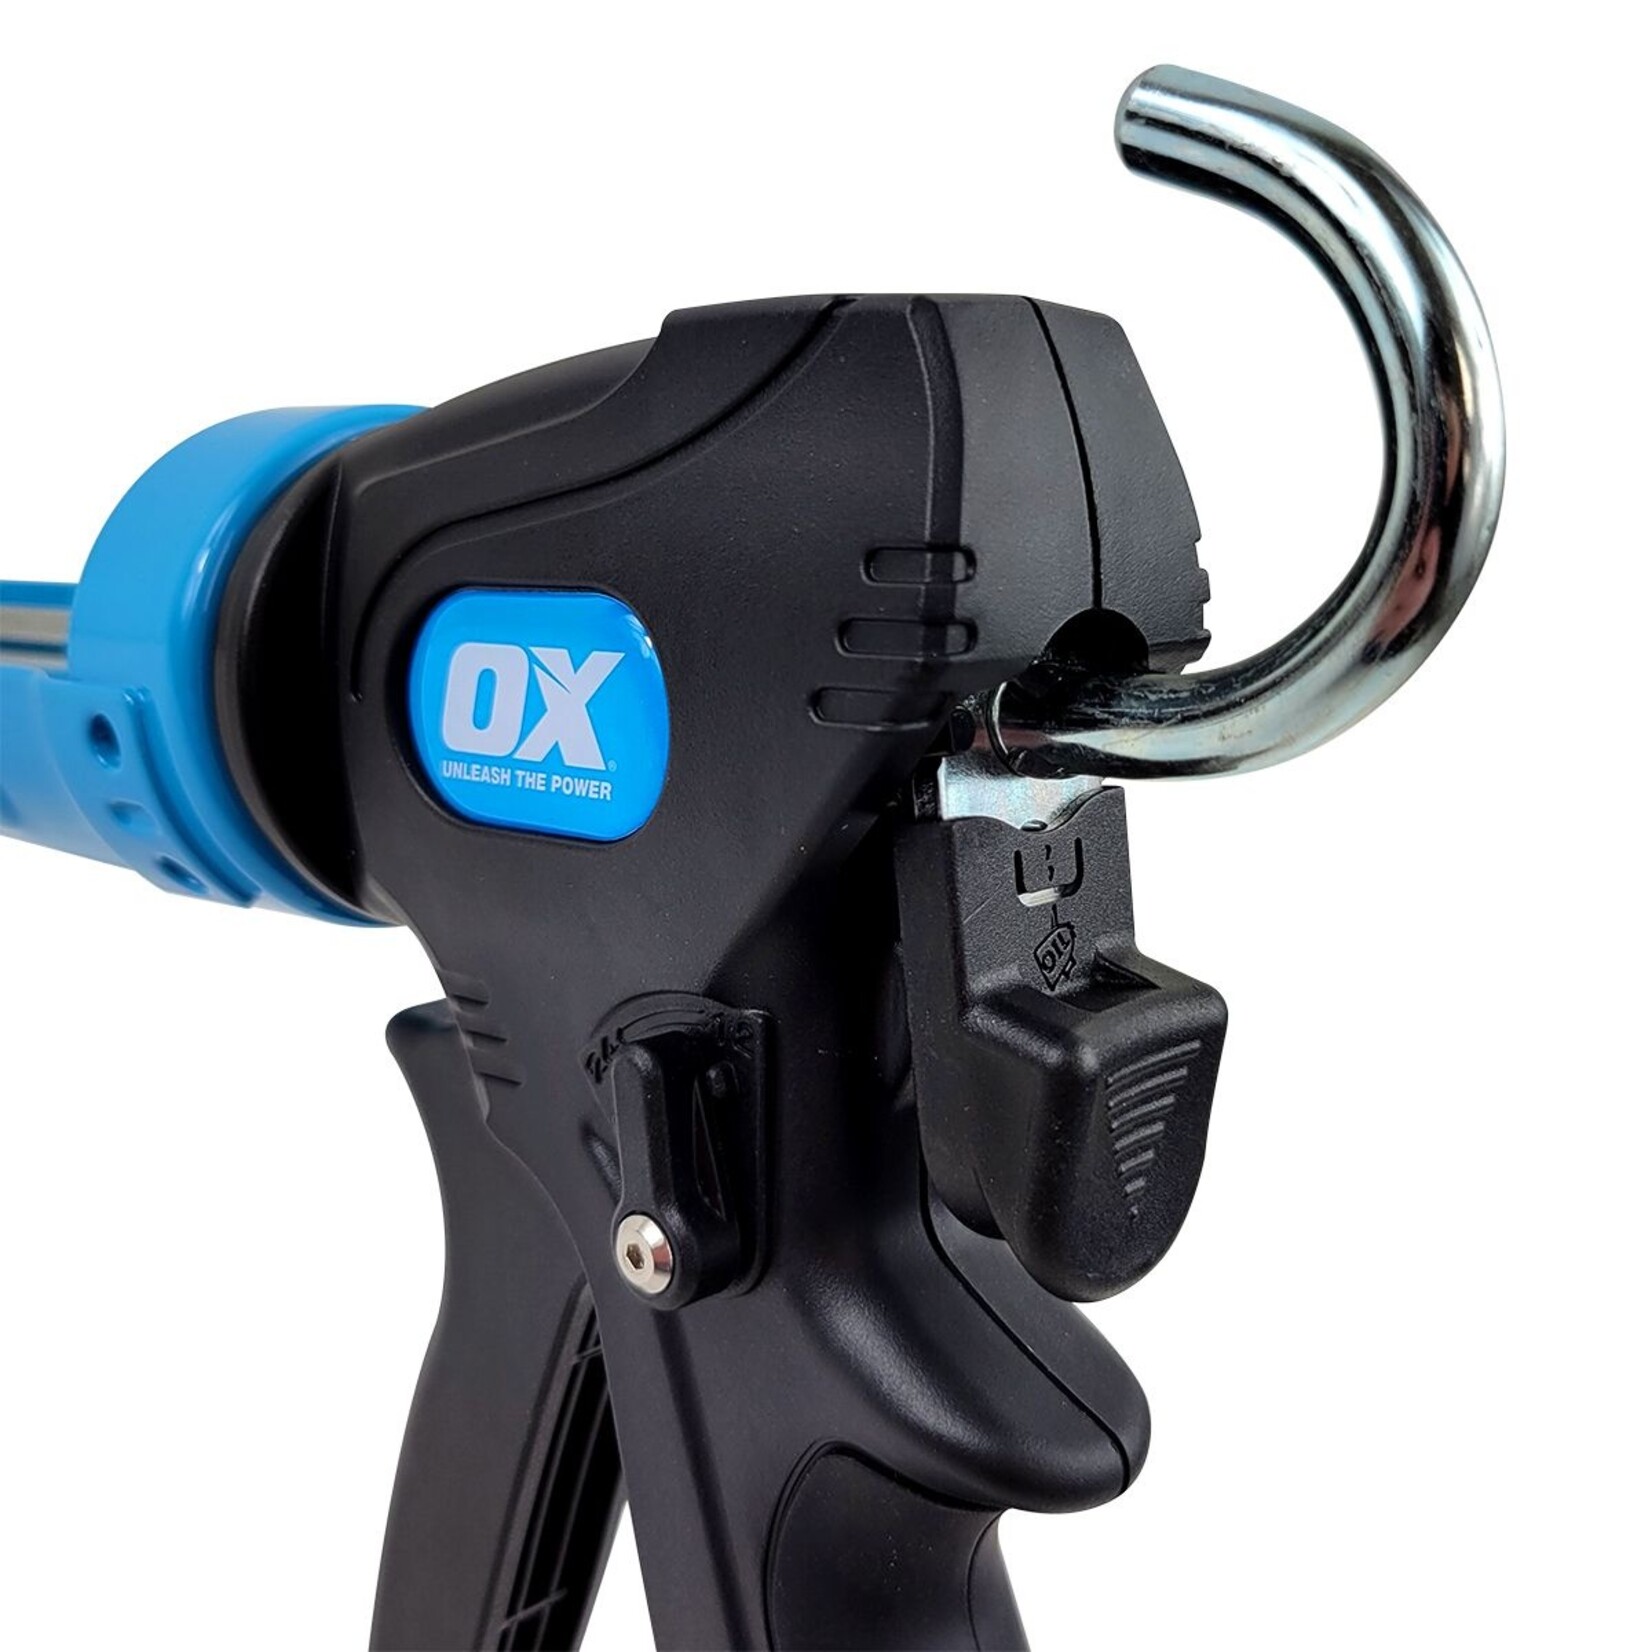 Ox Tools OX Pro 10-Ounce / 310ml Dual Thrust Caulk Gun | 12:1 & 24:1 Thrust Ratio